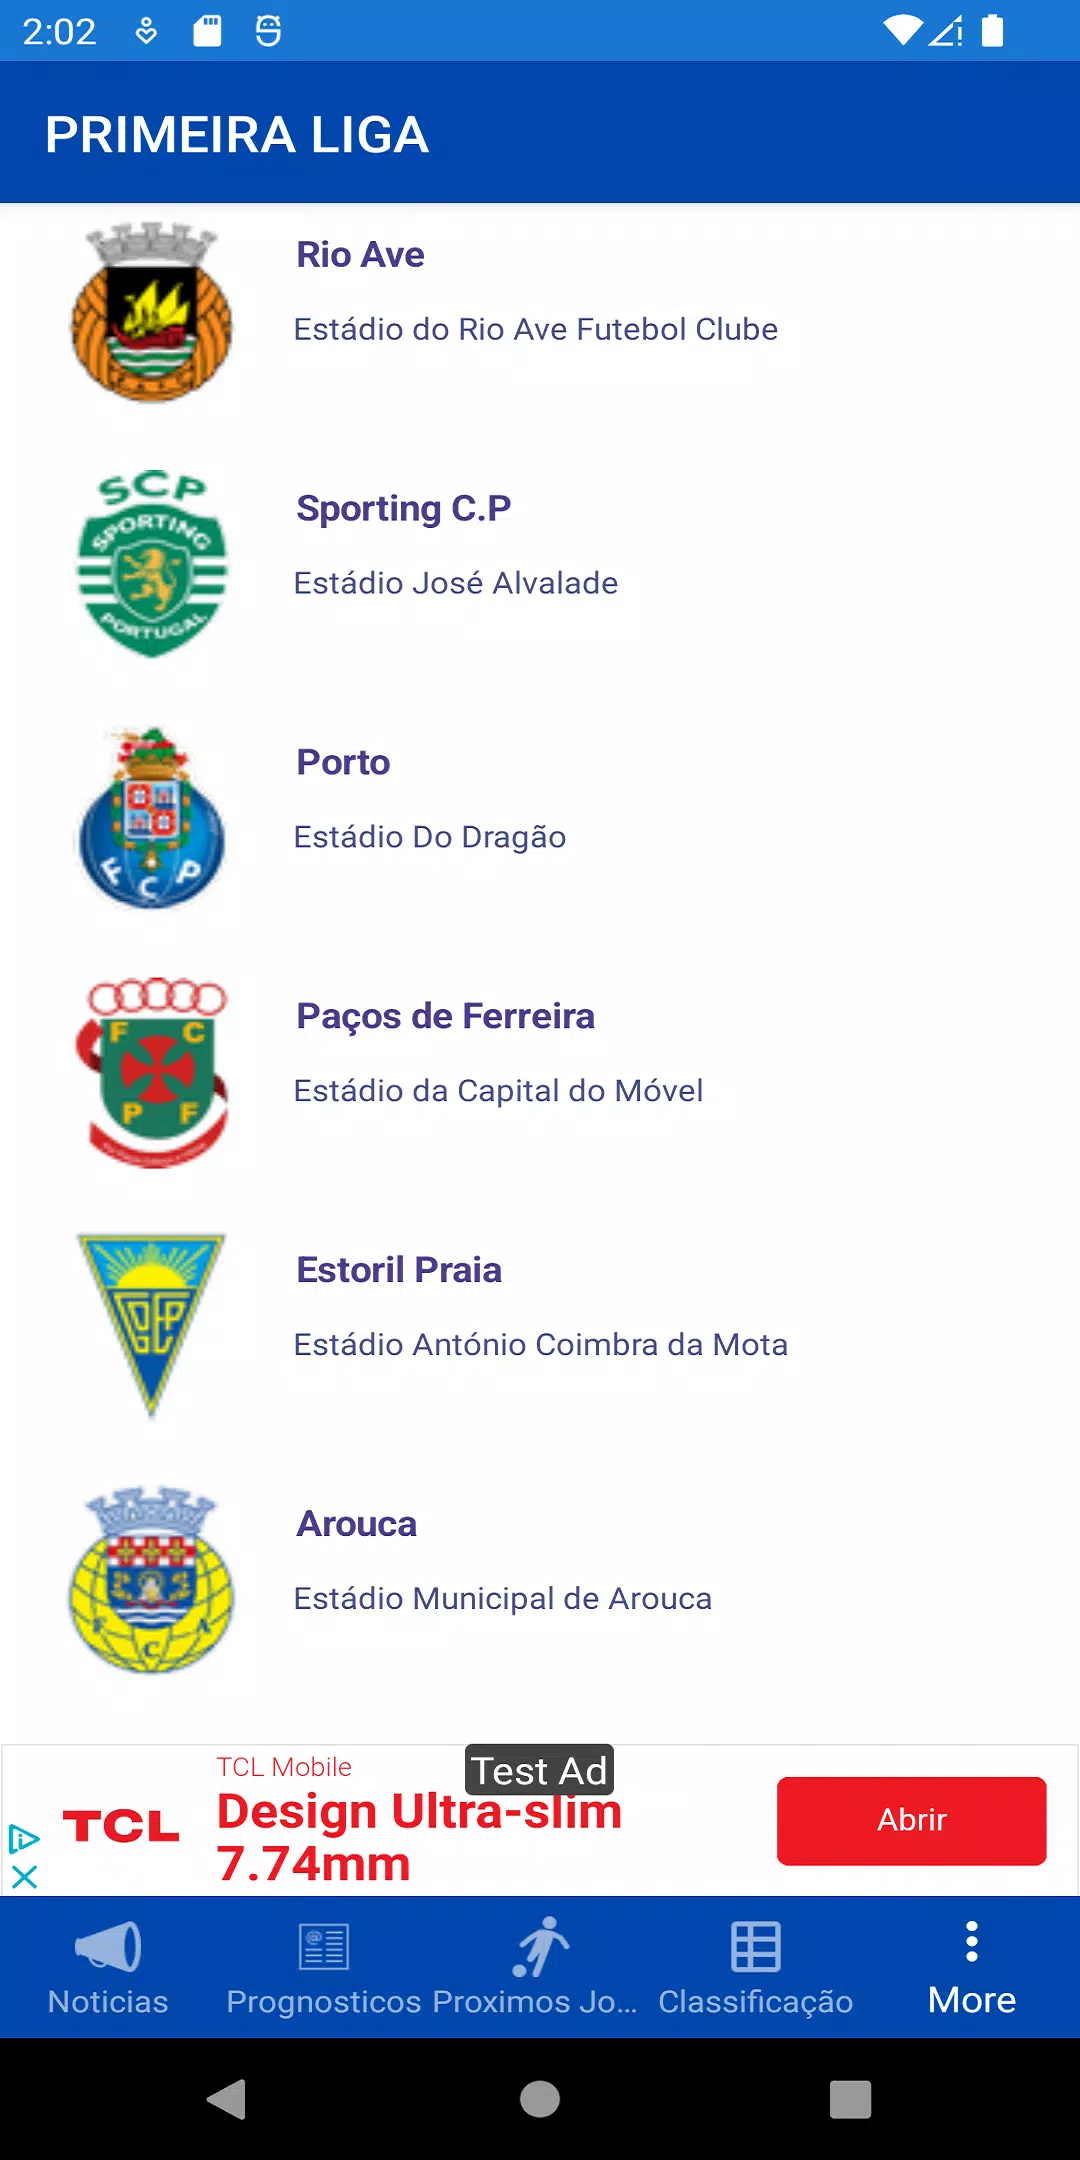 Primeira Liga - Portugal APK for Android Download